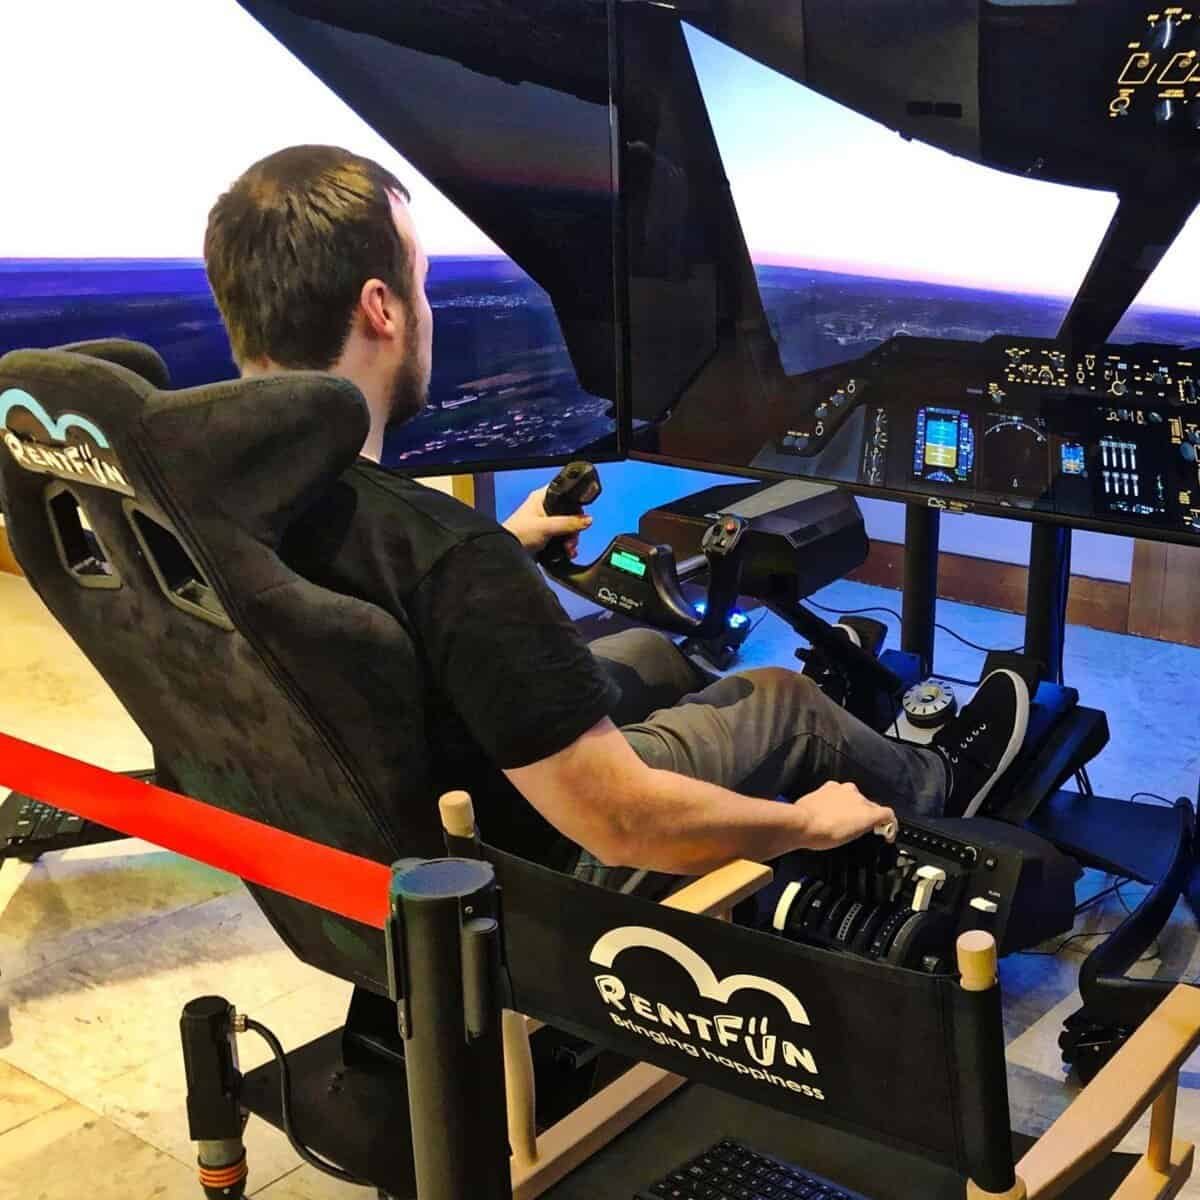 RoarFun Clients HP Enterprise immersive motion flight simulator at the local 5 star hotel airport